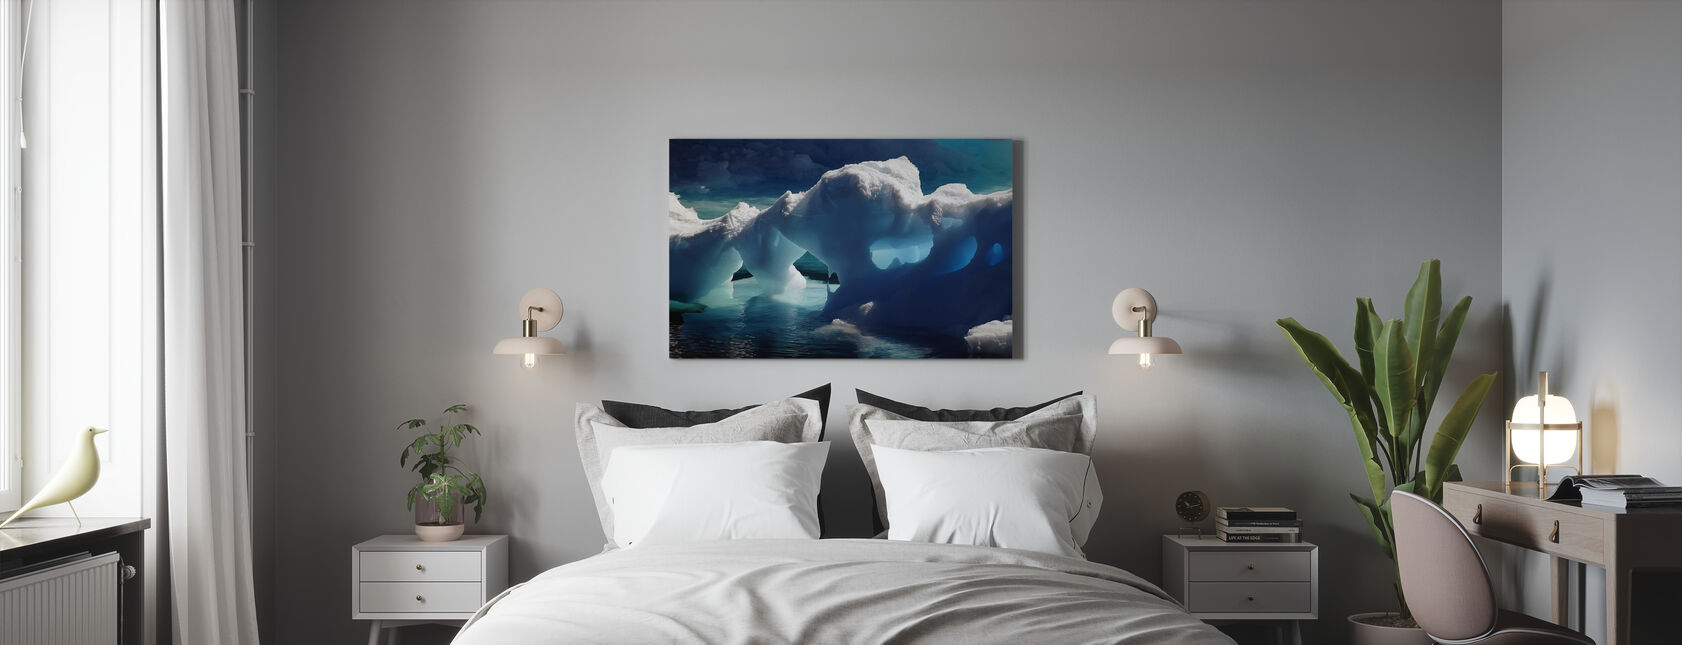 Antarctic Ice Caves - Canvas print - Bedroom